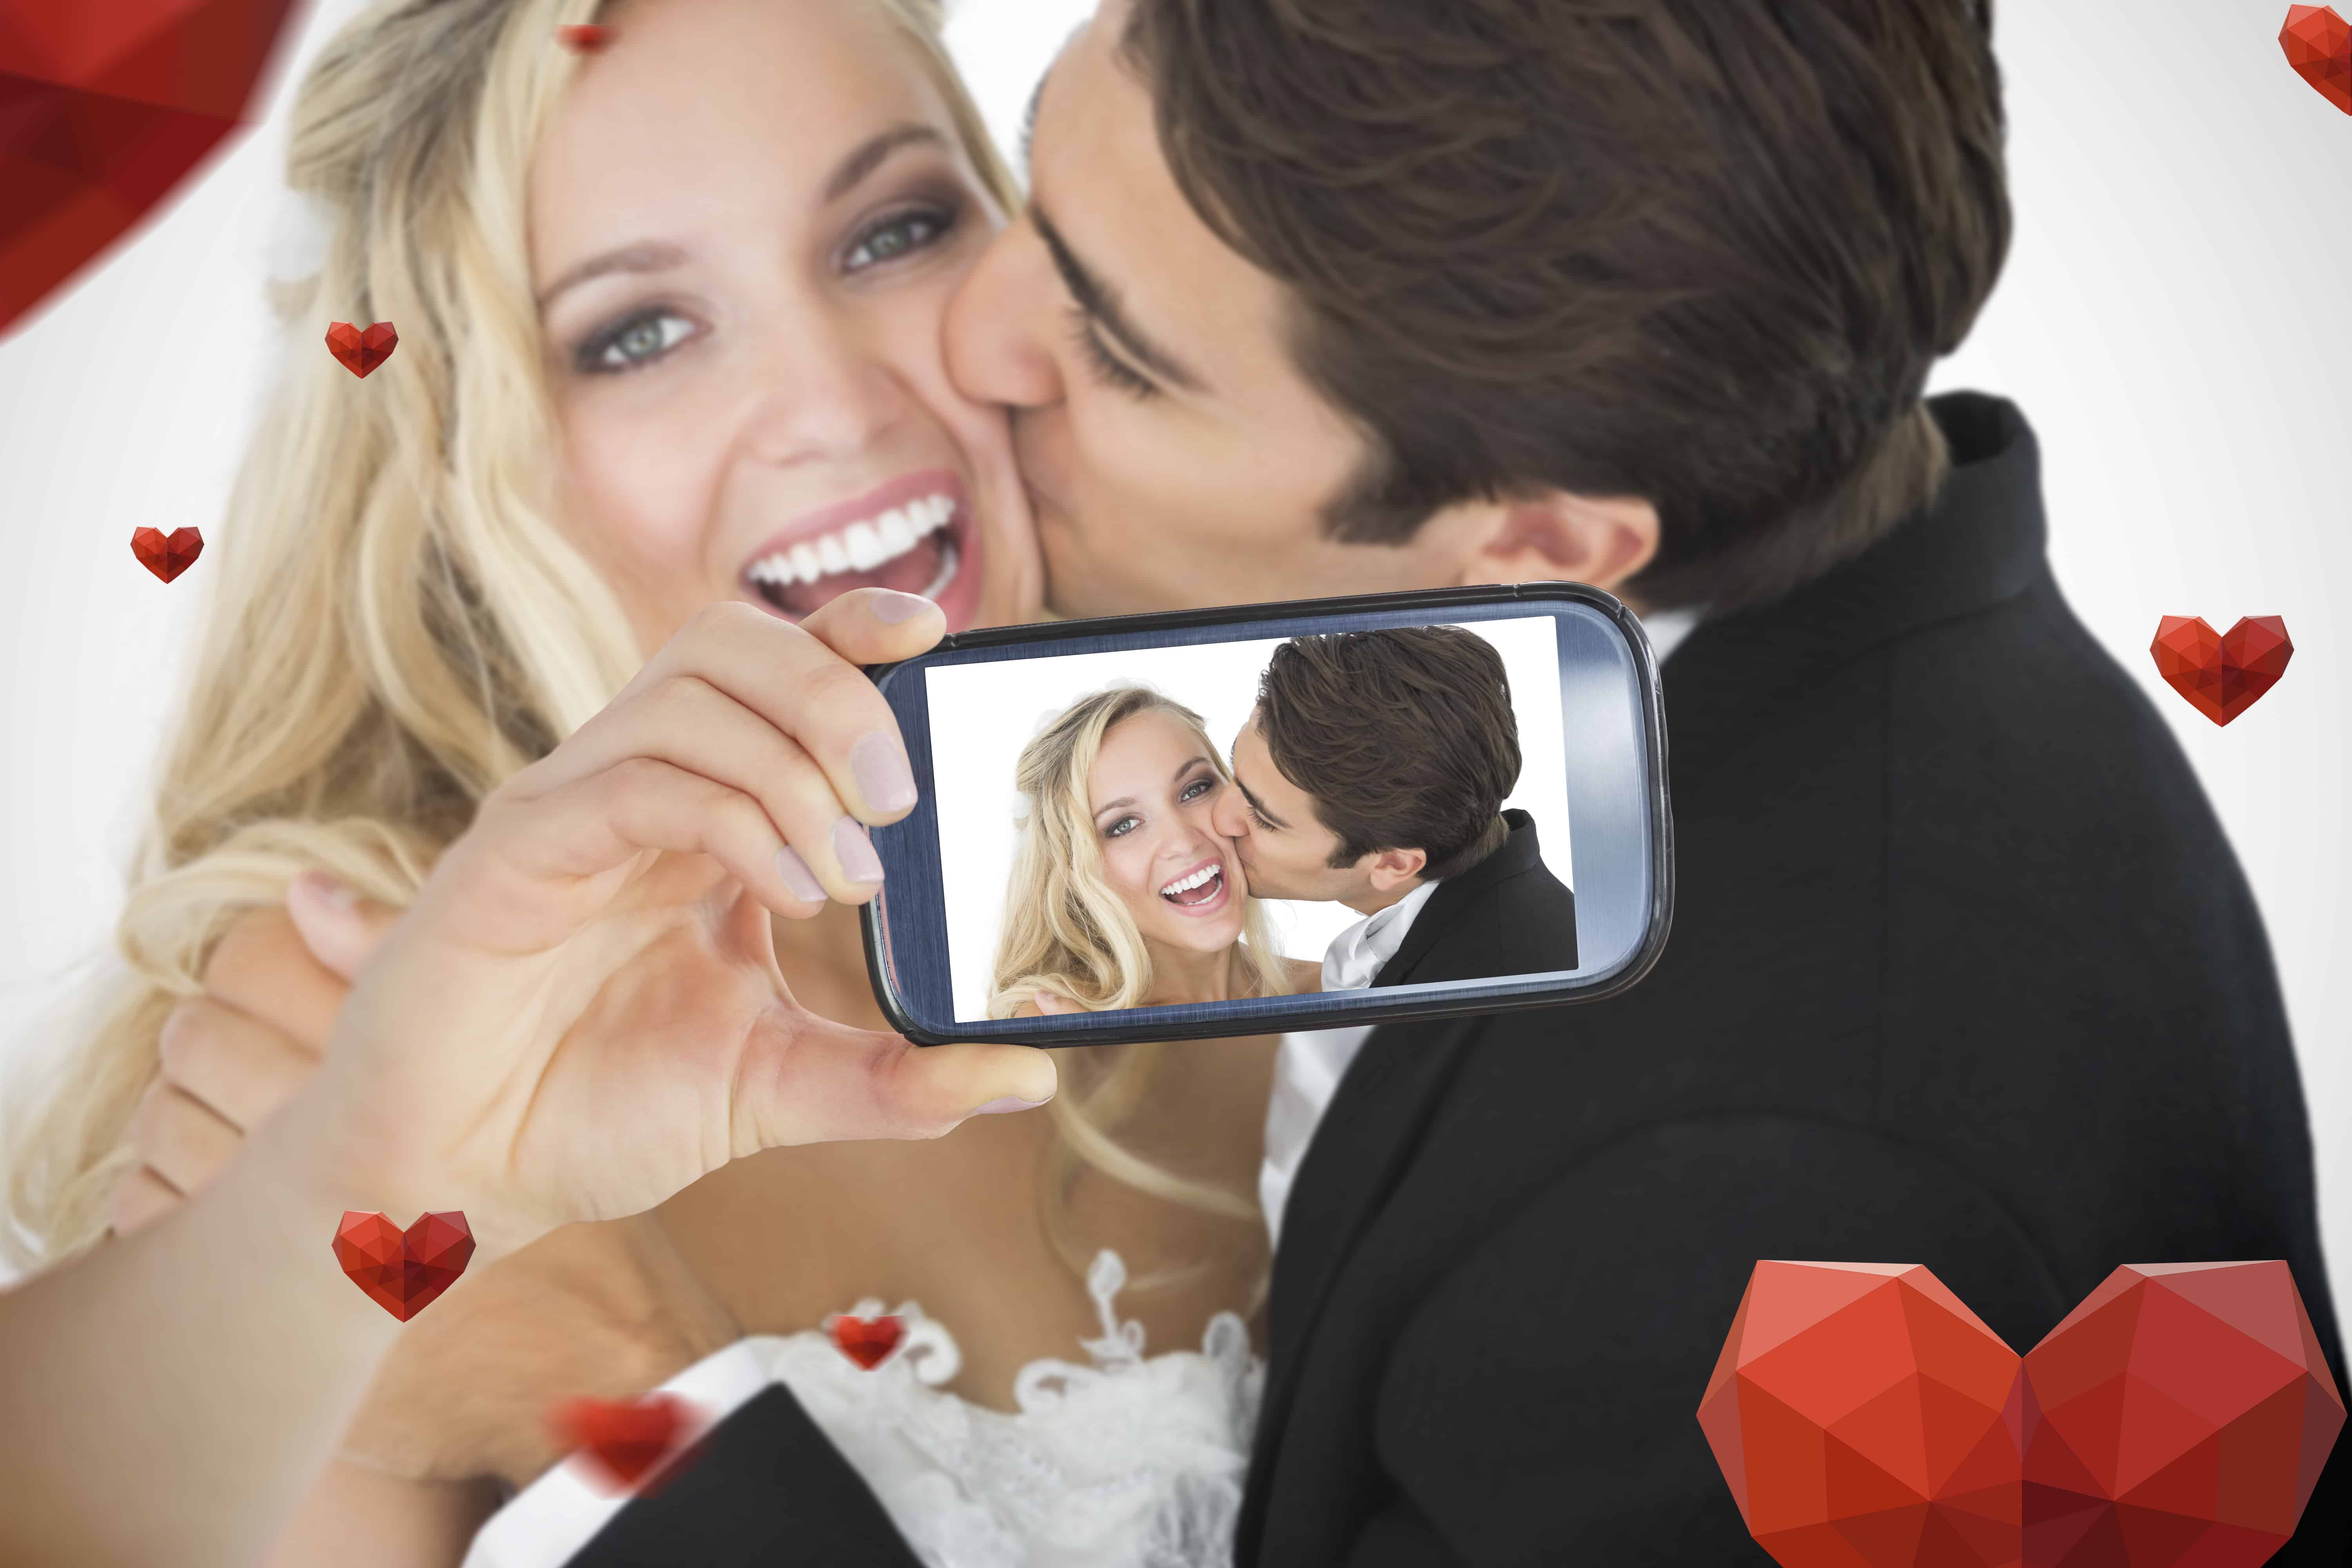 https://media.publit.io/file/WeddingReels/wedding-selfie-1.jpg